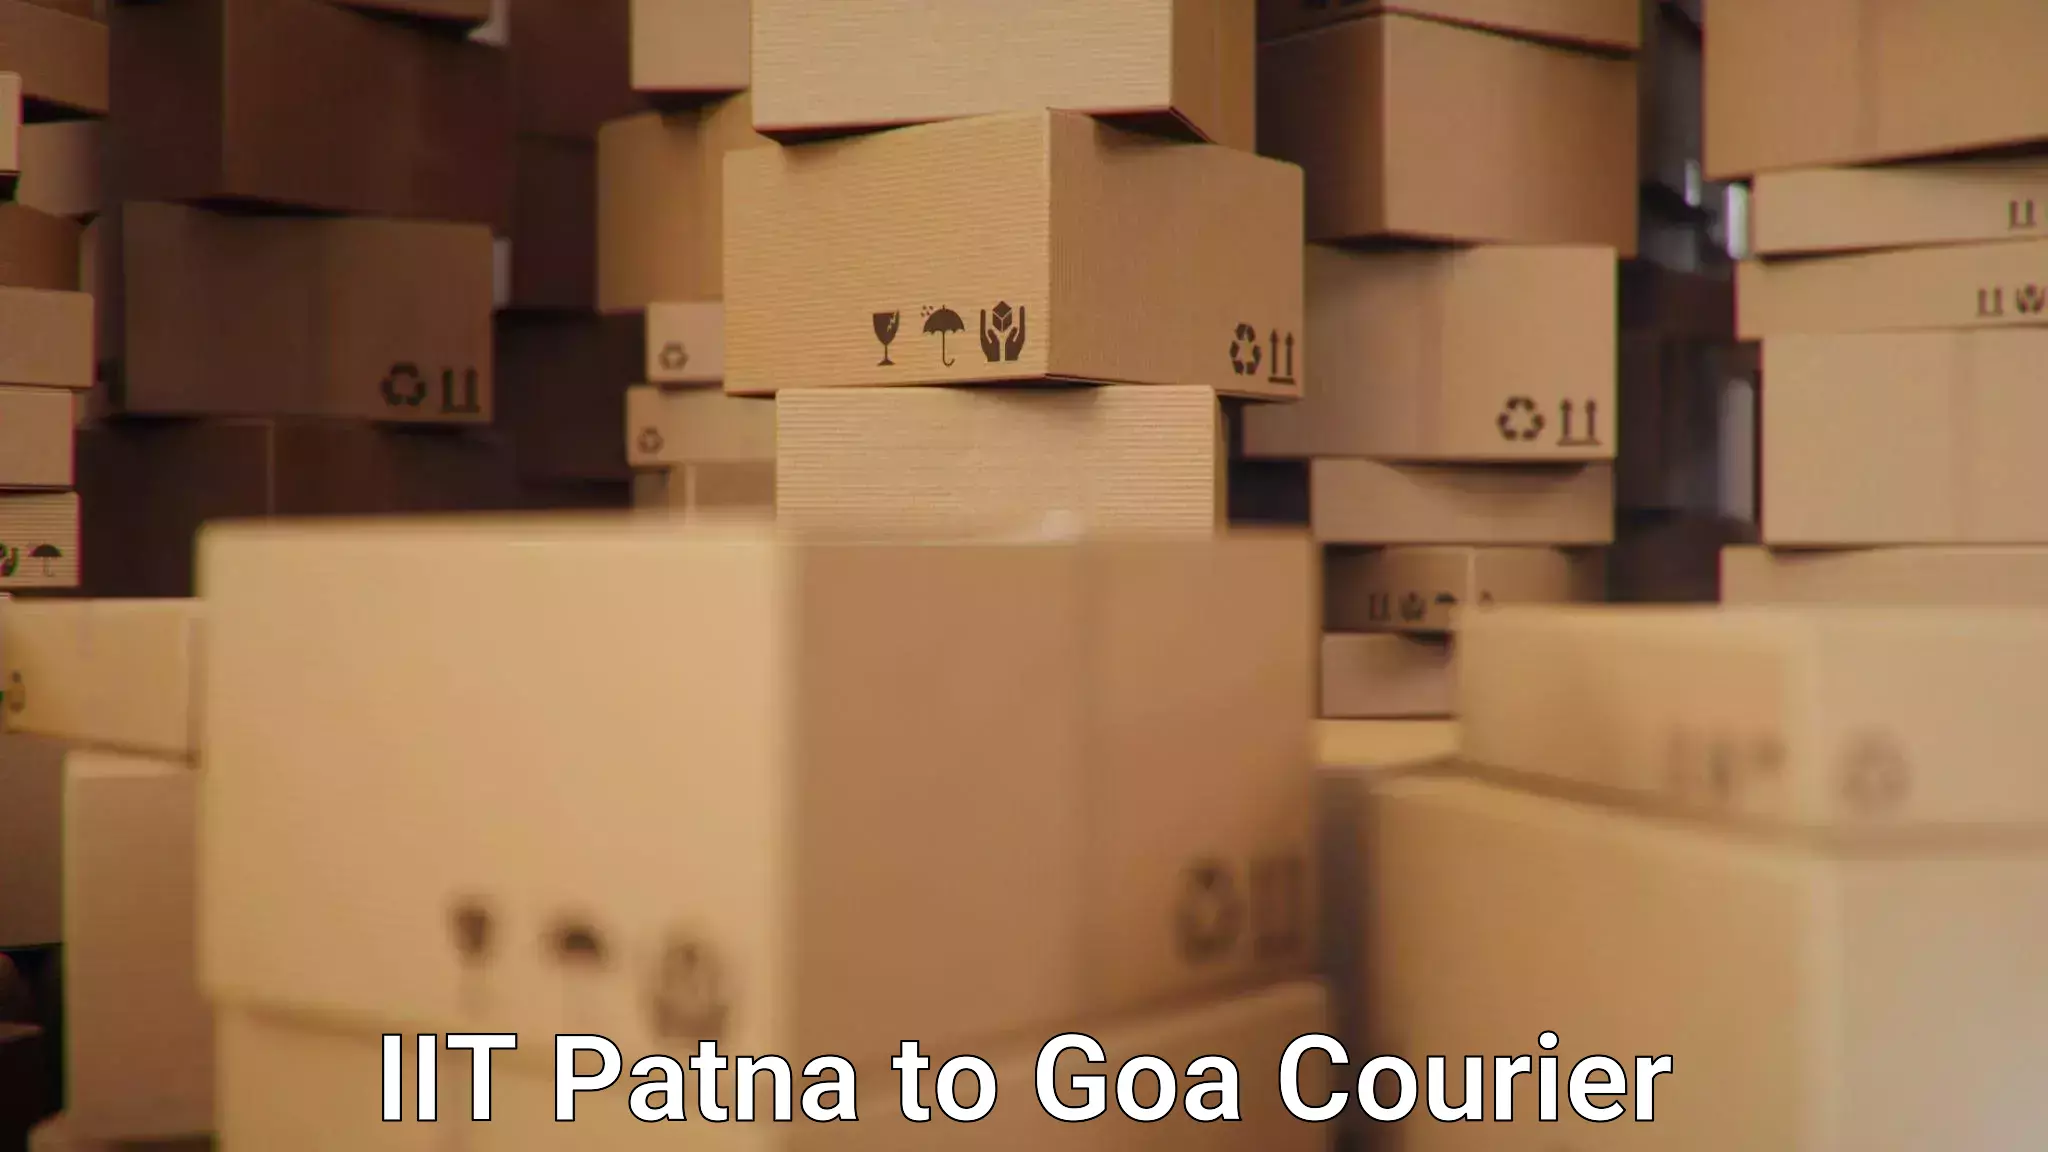 Express logistics service IIT Patna to IIT Goa